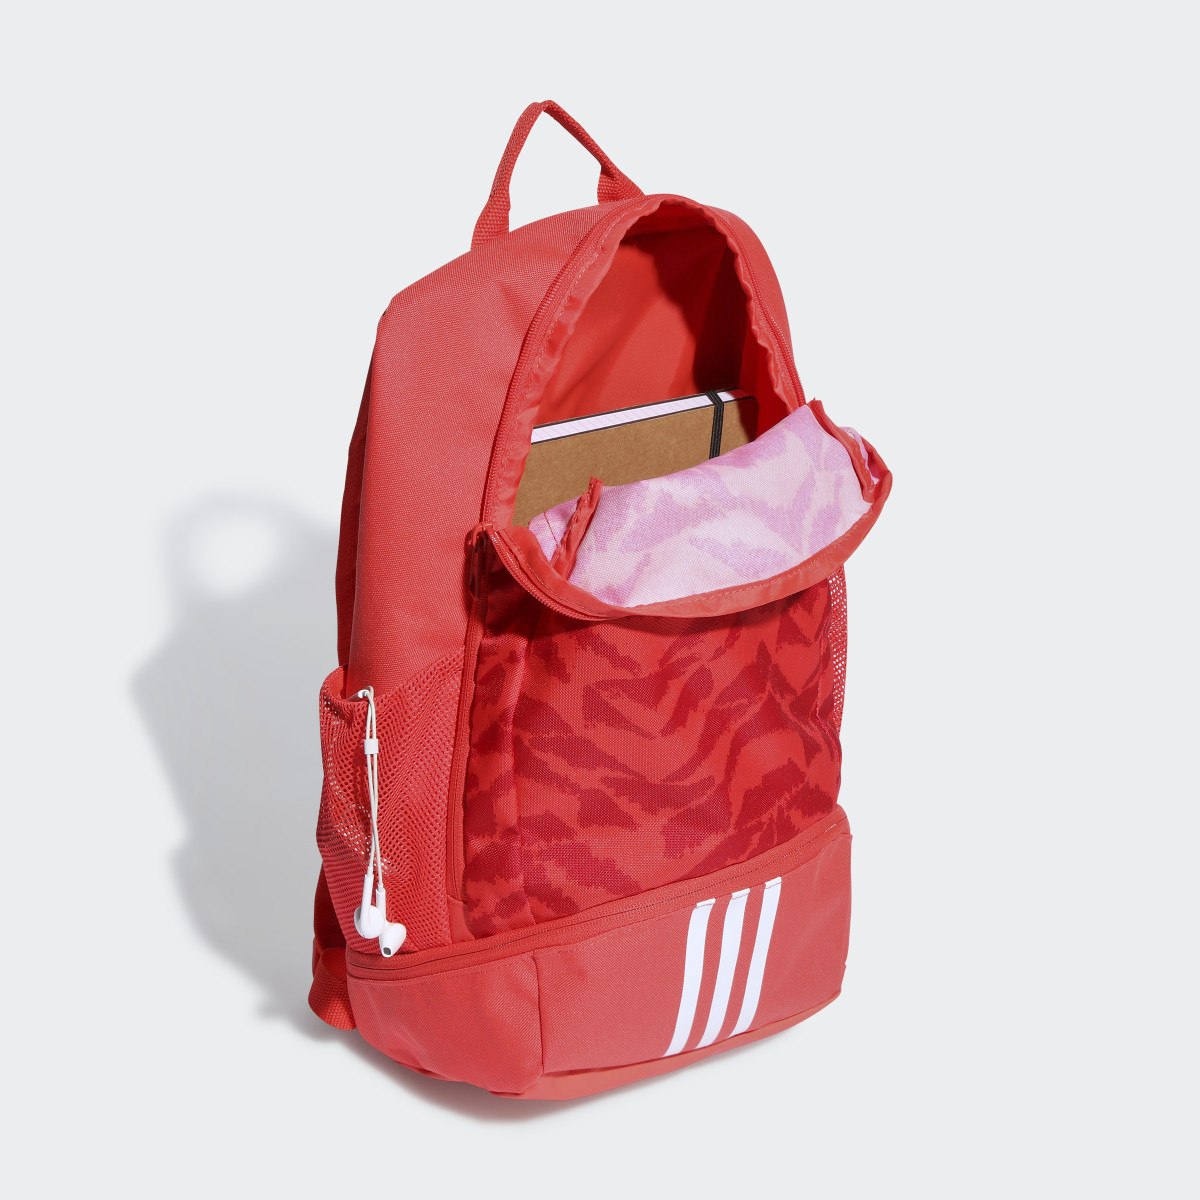 Adidas Football Backpack. 5